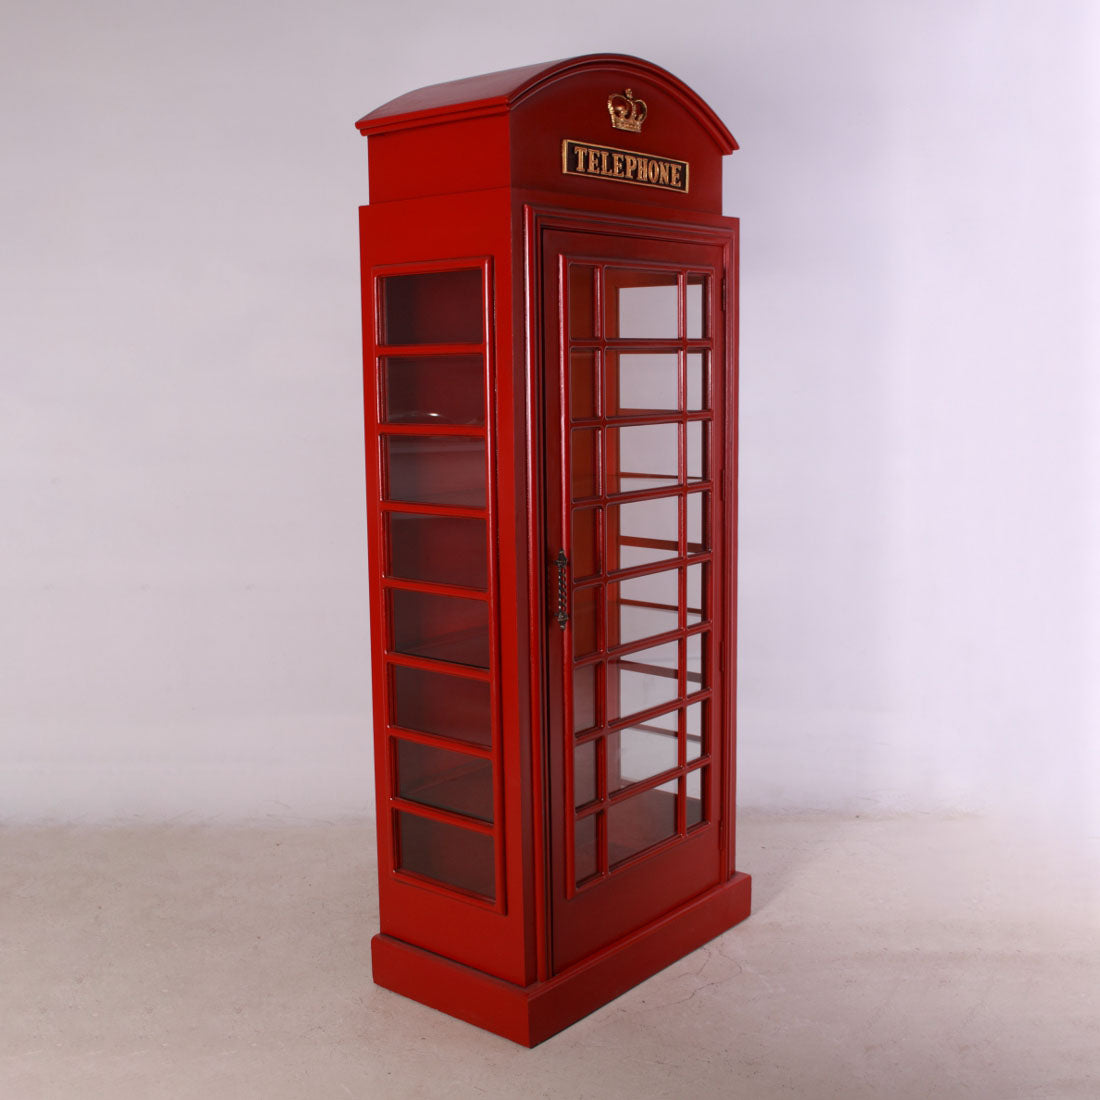 Cabinet British Phone Booth Statue